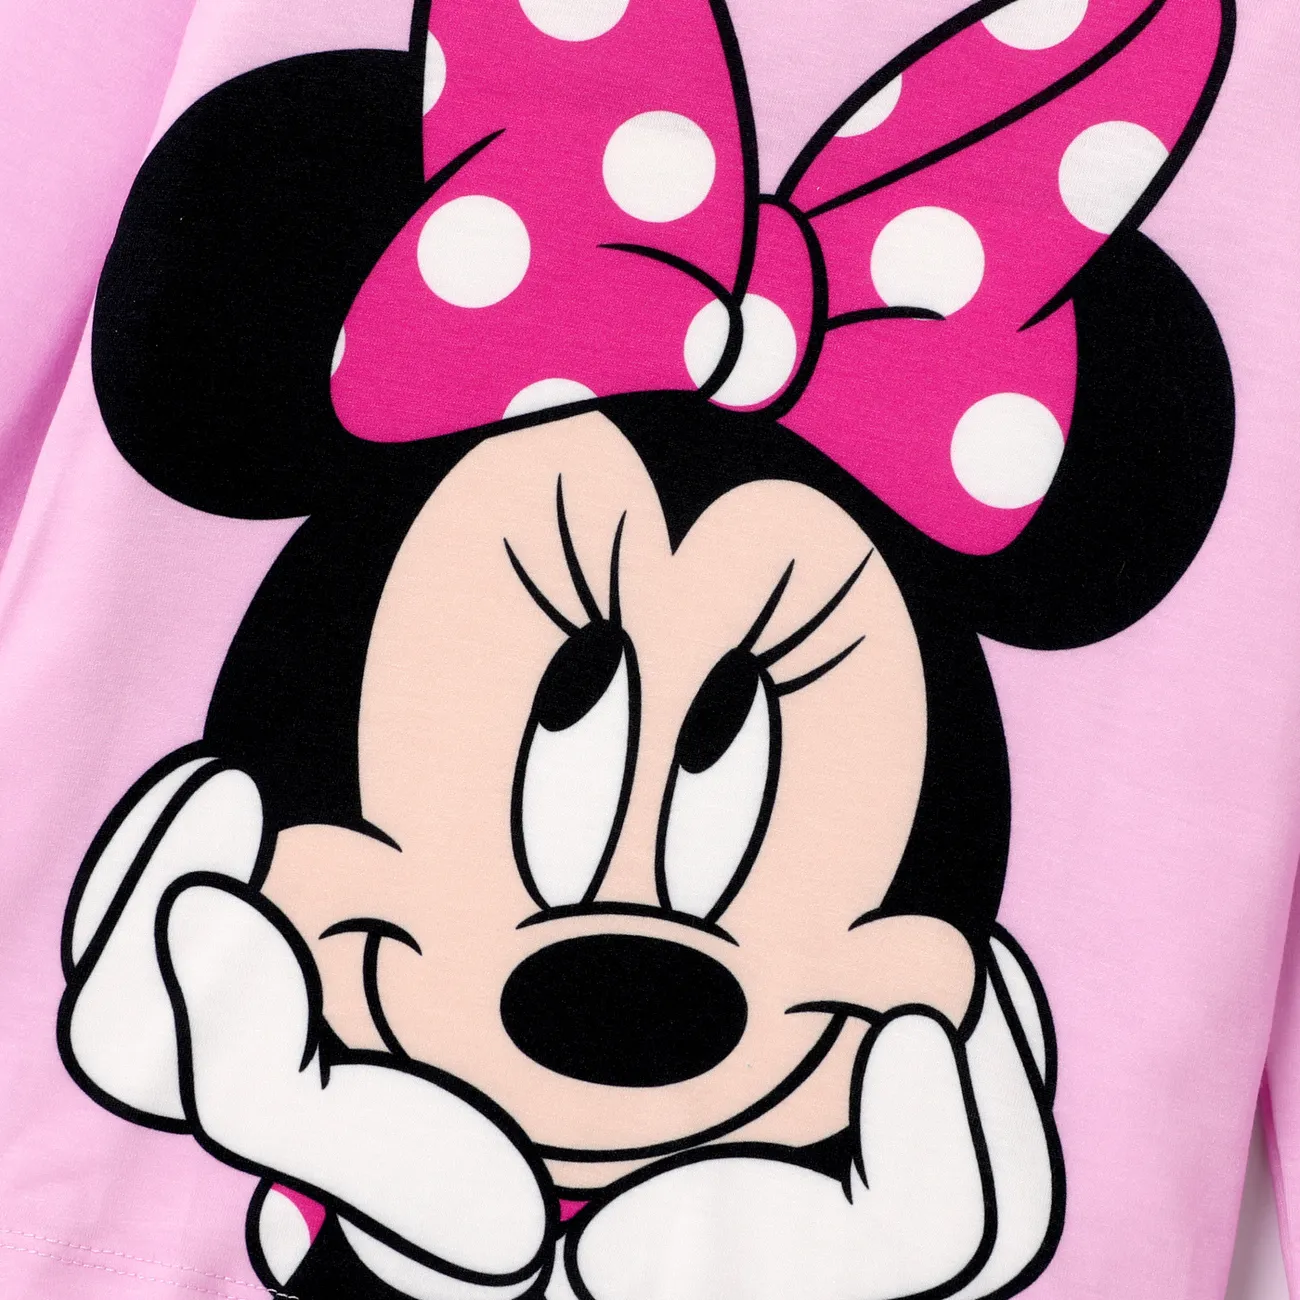 Disney Mickey and Friends Pascua Unisex Infantil Camiseta Rosado big image 1